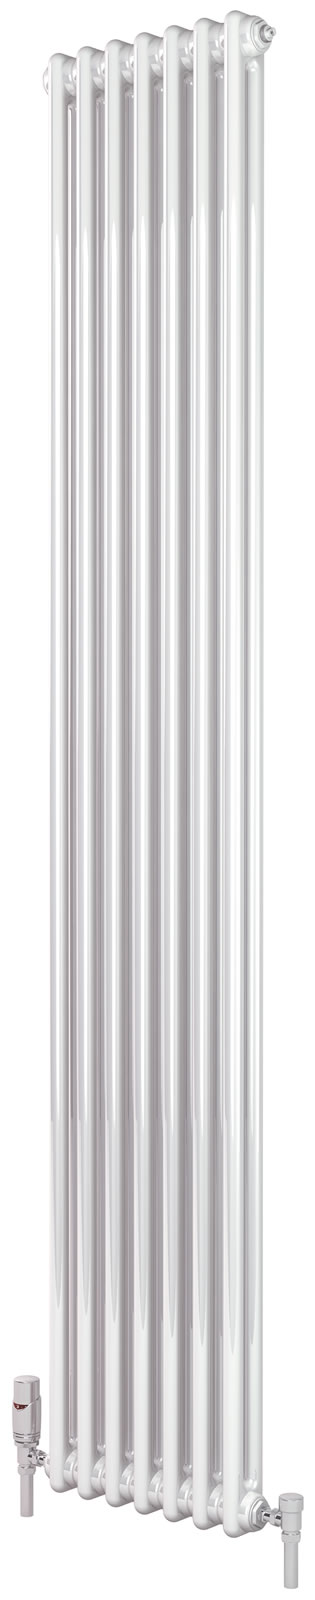 Stelrad Vita Column Wave radiator loyalty reward